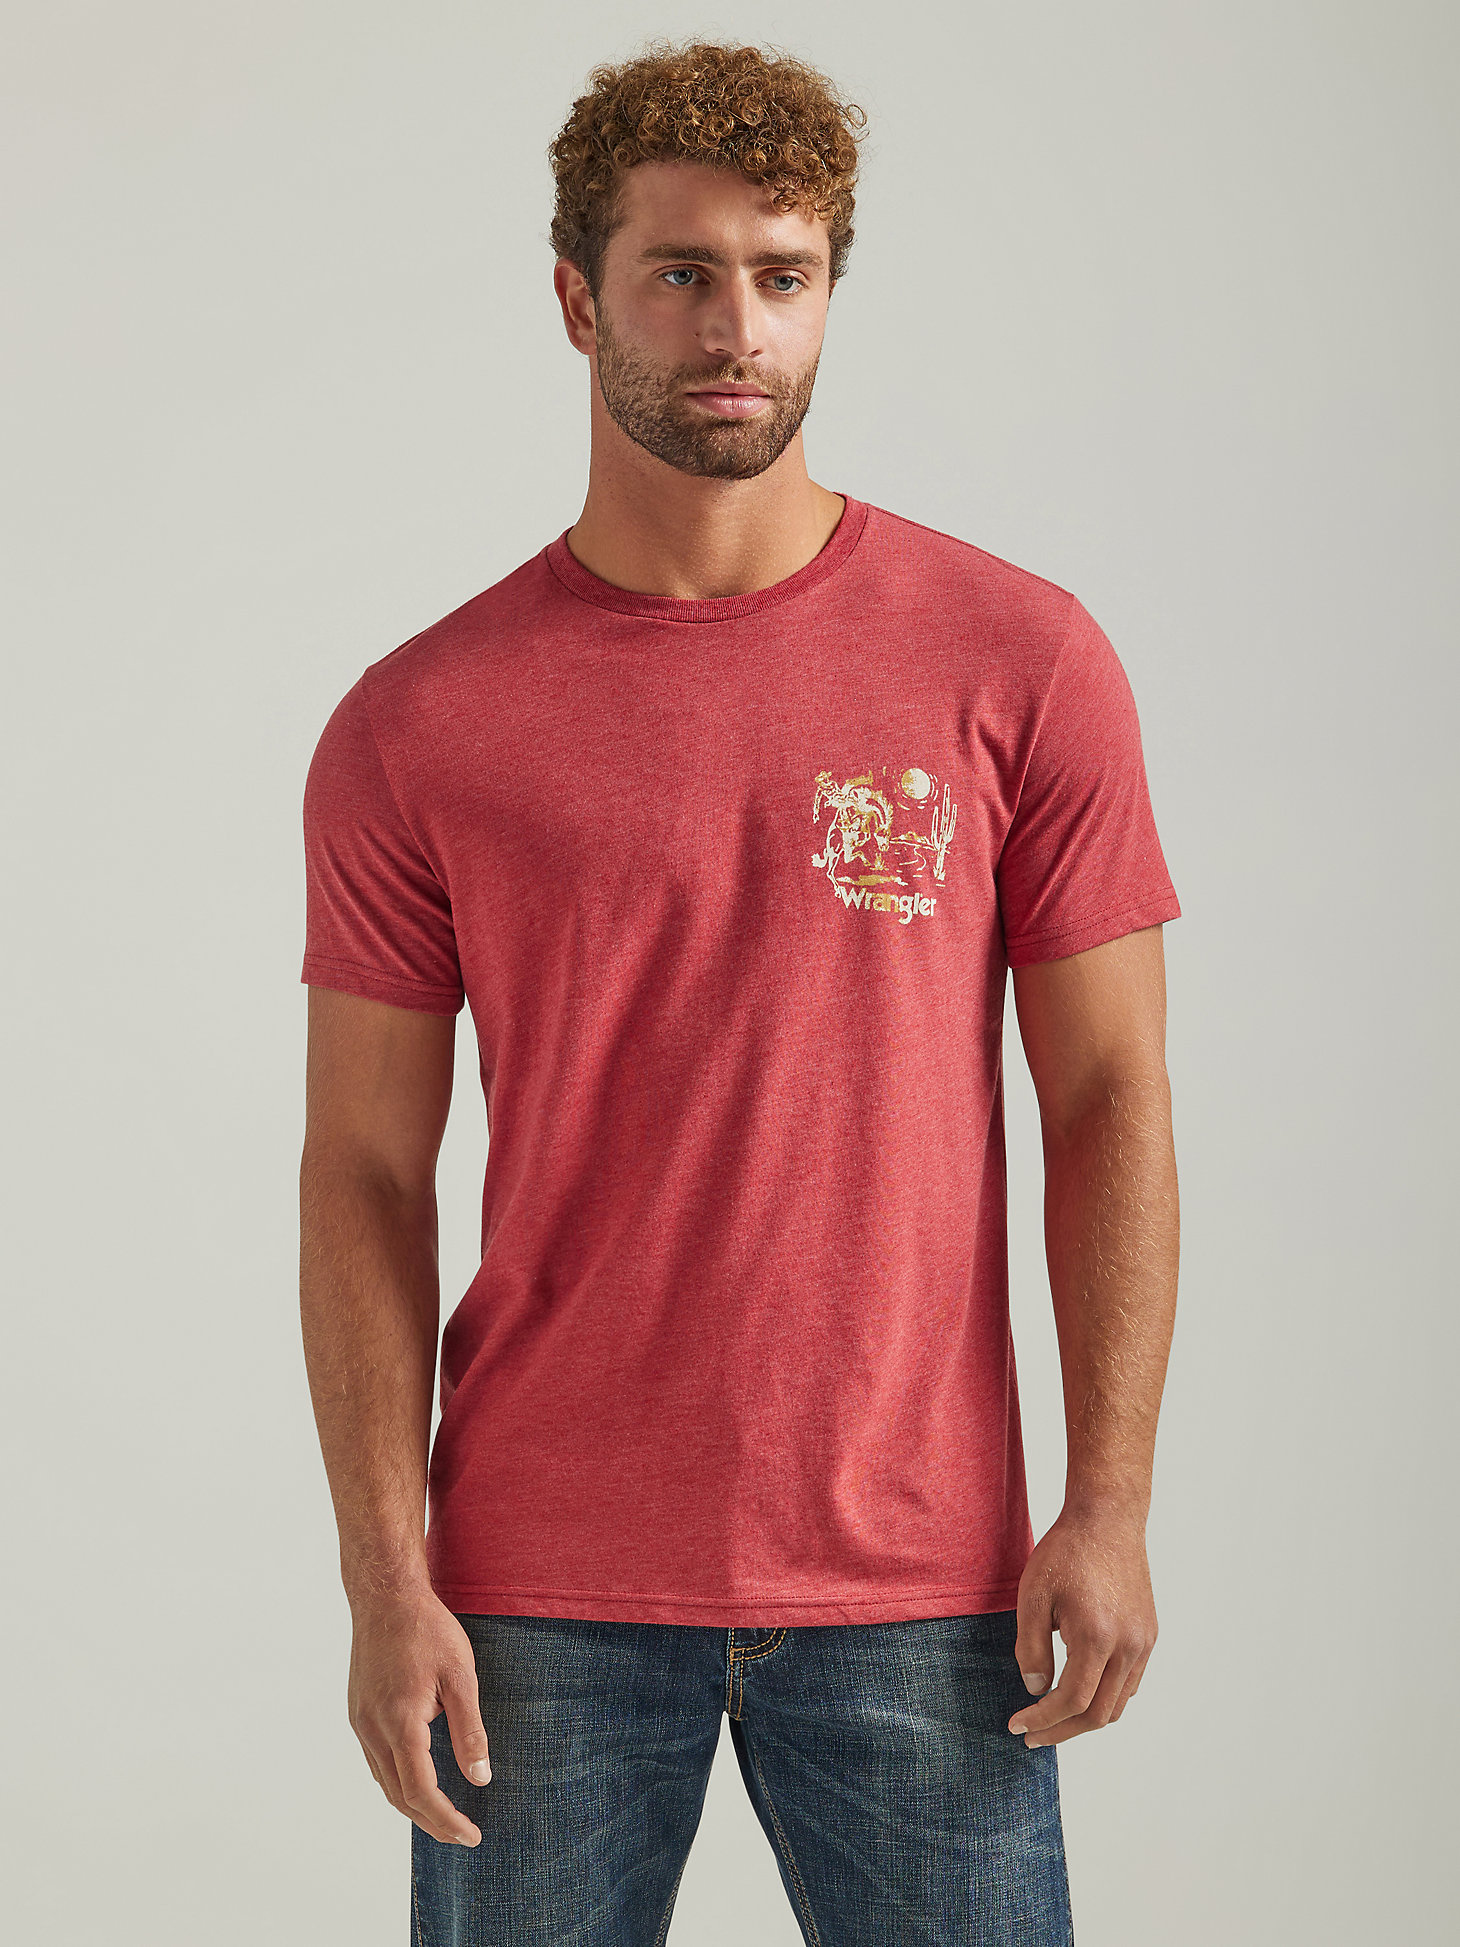 Men's Wrangler American Classic Graphic T-Shirt in Brick Red Heather alternative view 1